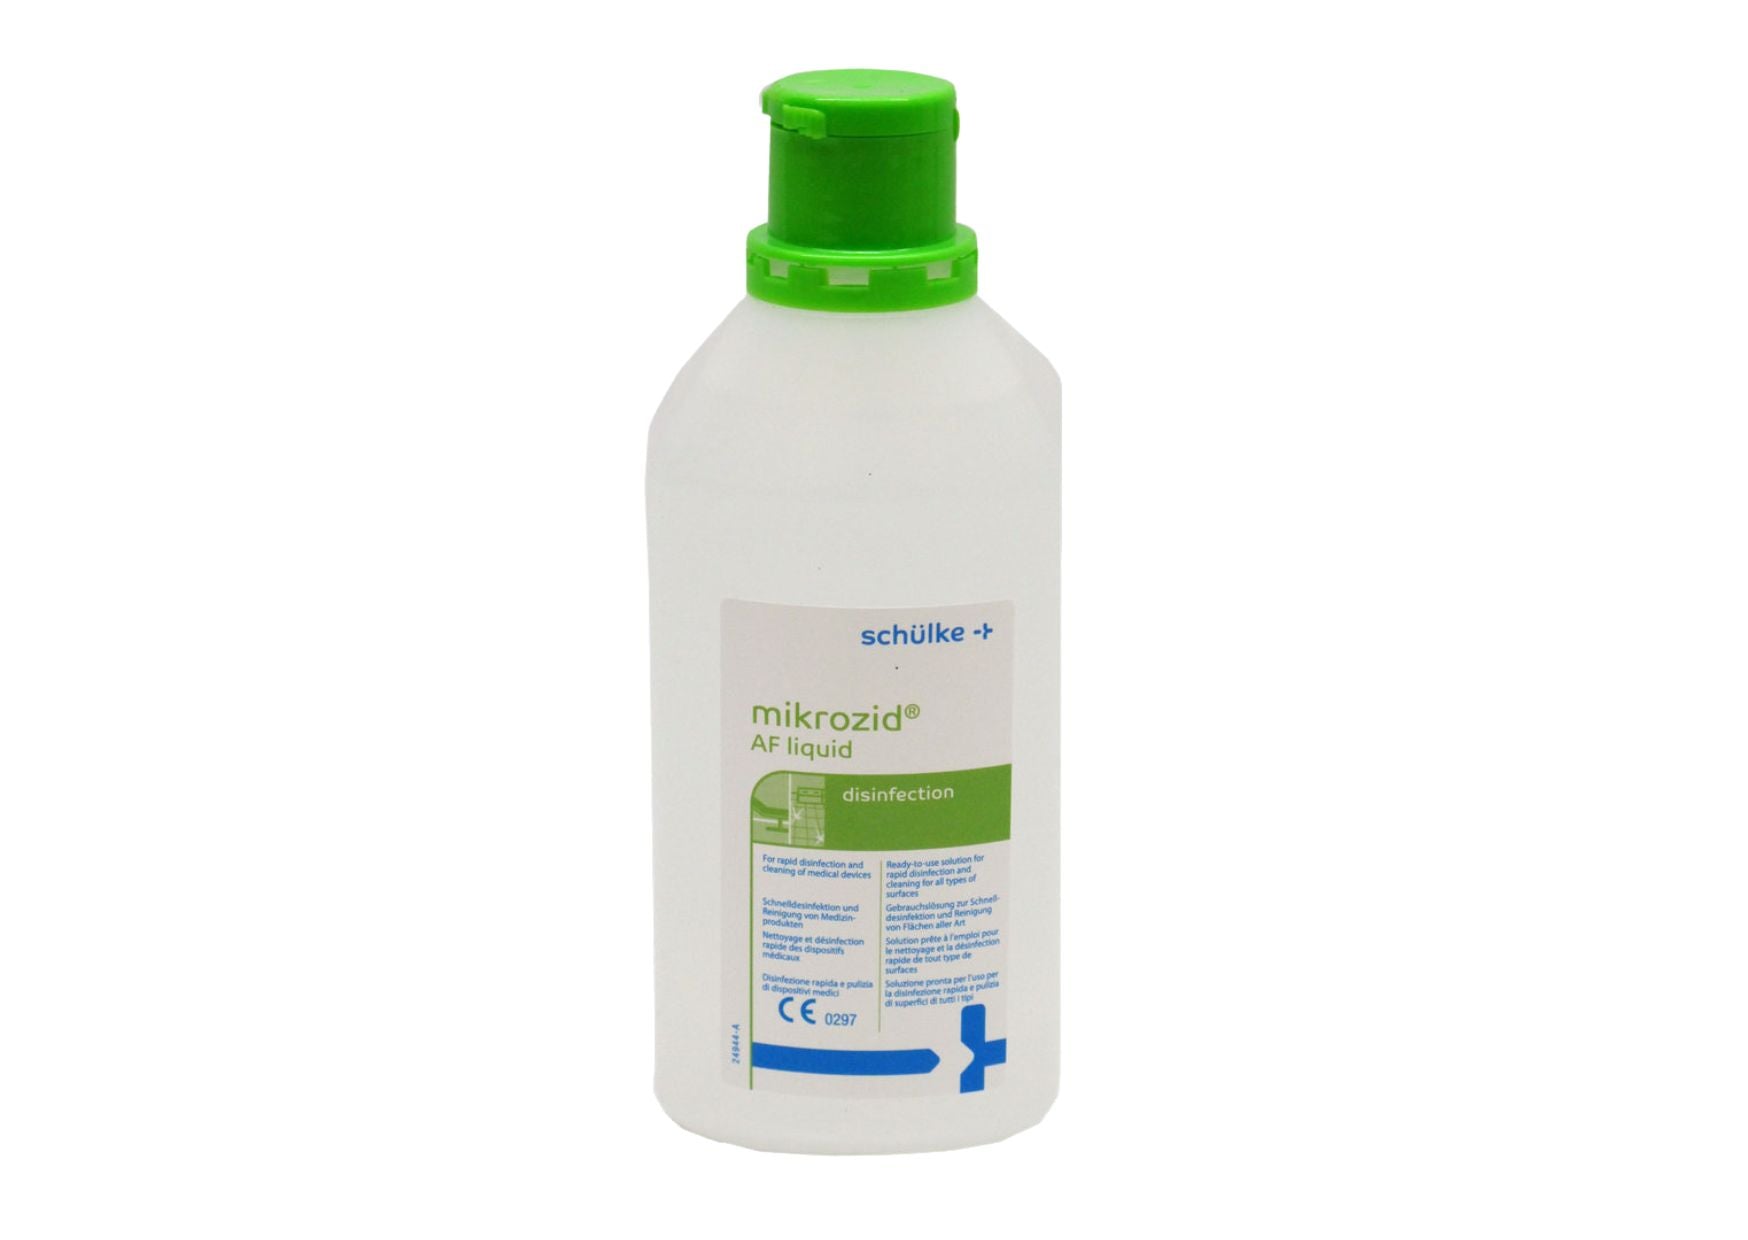 Schülke mikrozid AF liquid surface disinfection - 0